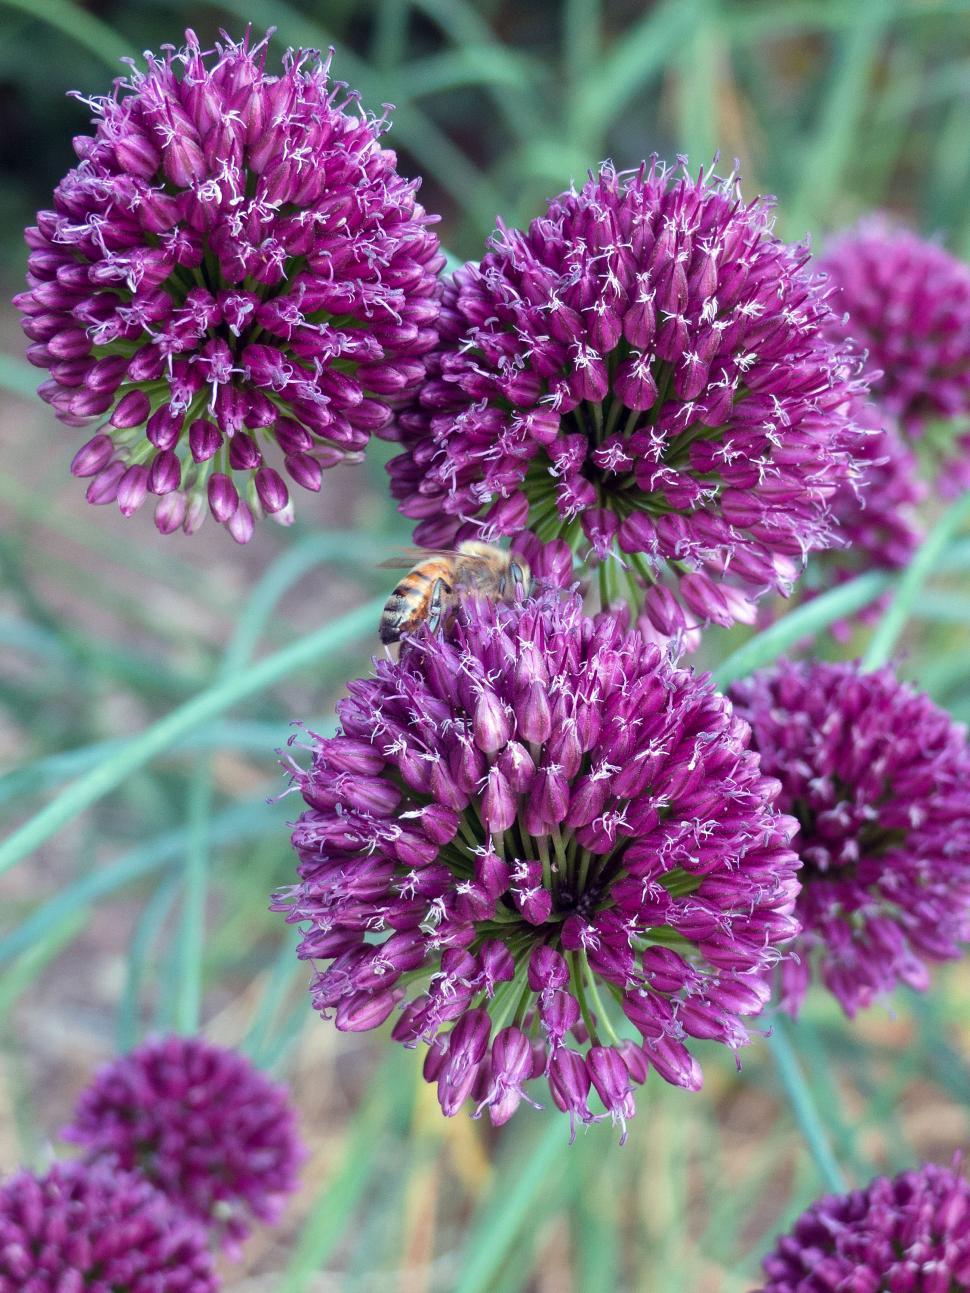 Free Image of Group of Purple Allium Flowers 